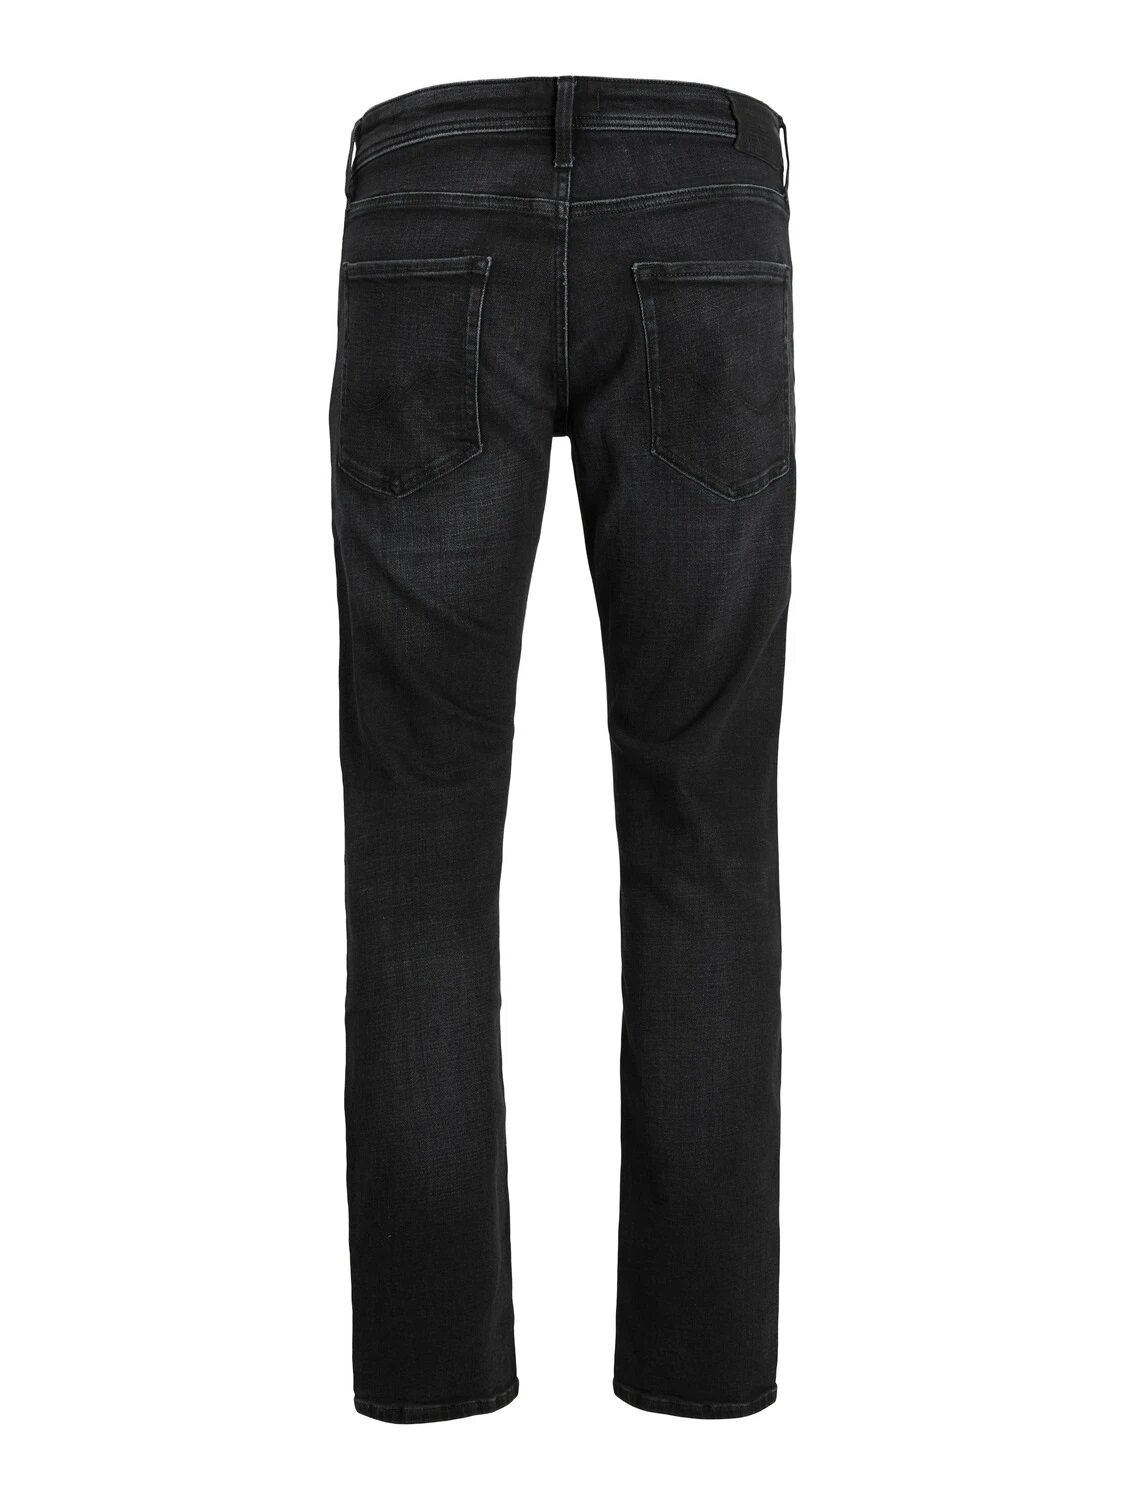 Comfort Fit Jeans - Black